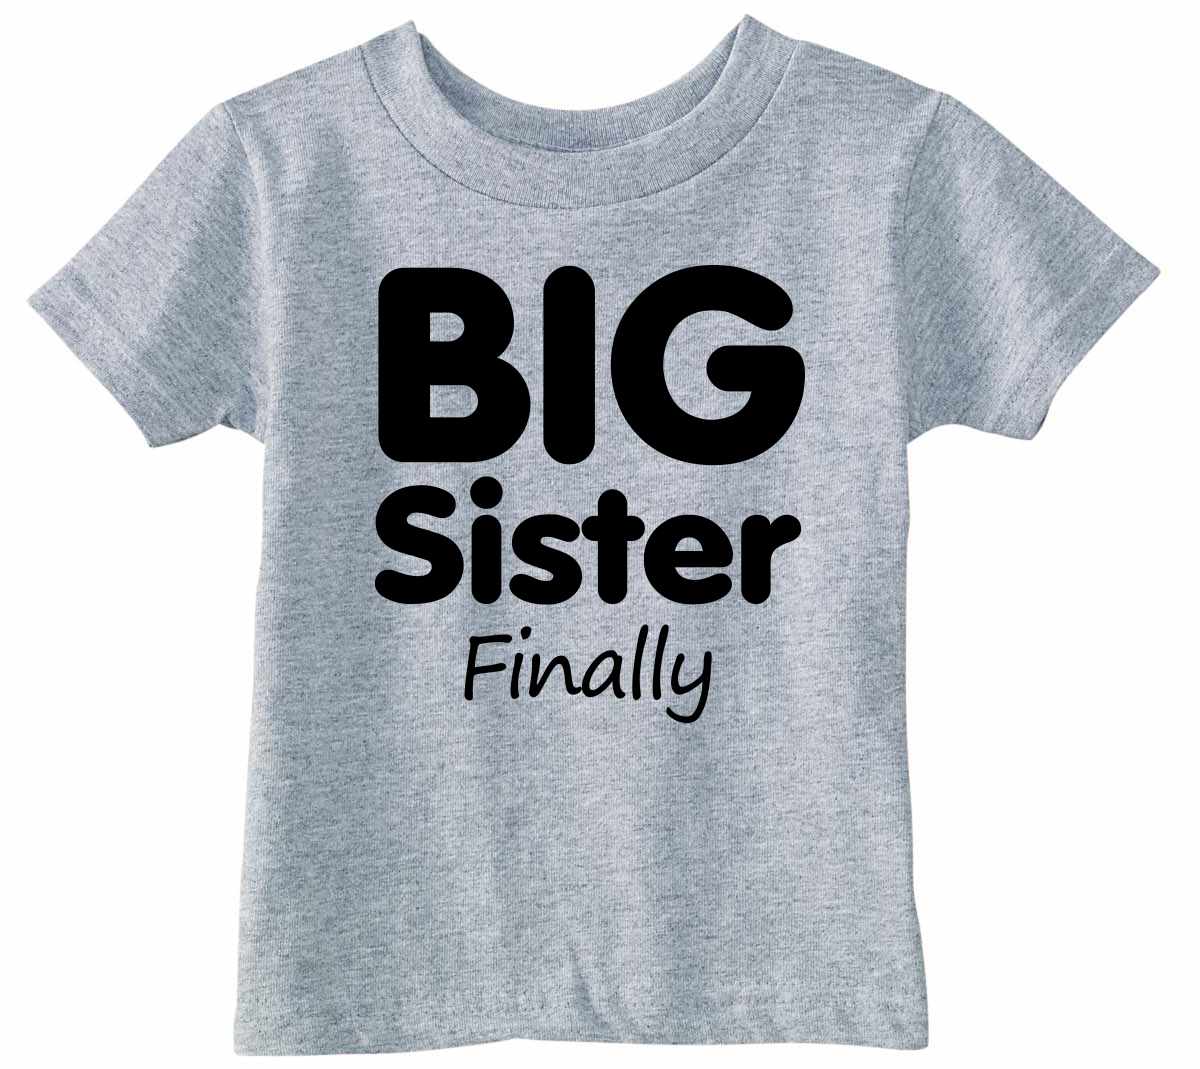 Big Sister Finally on Infant-Toddler T-Shirt (#1376-7)